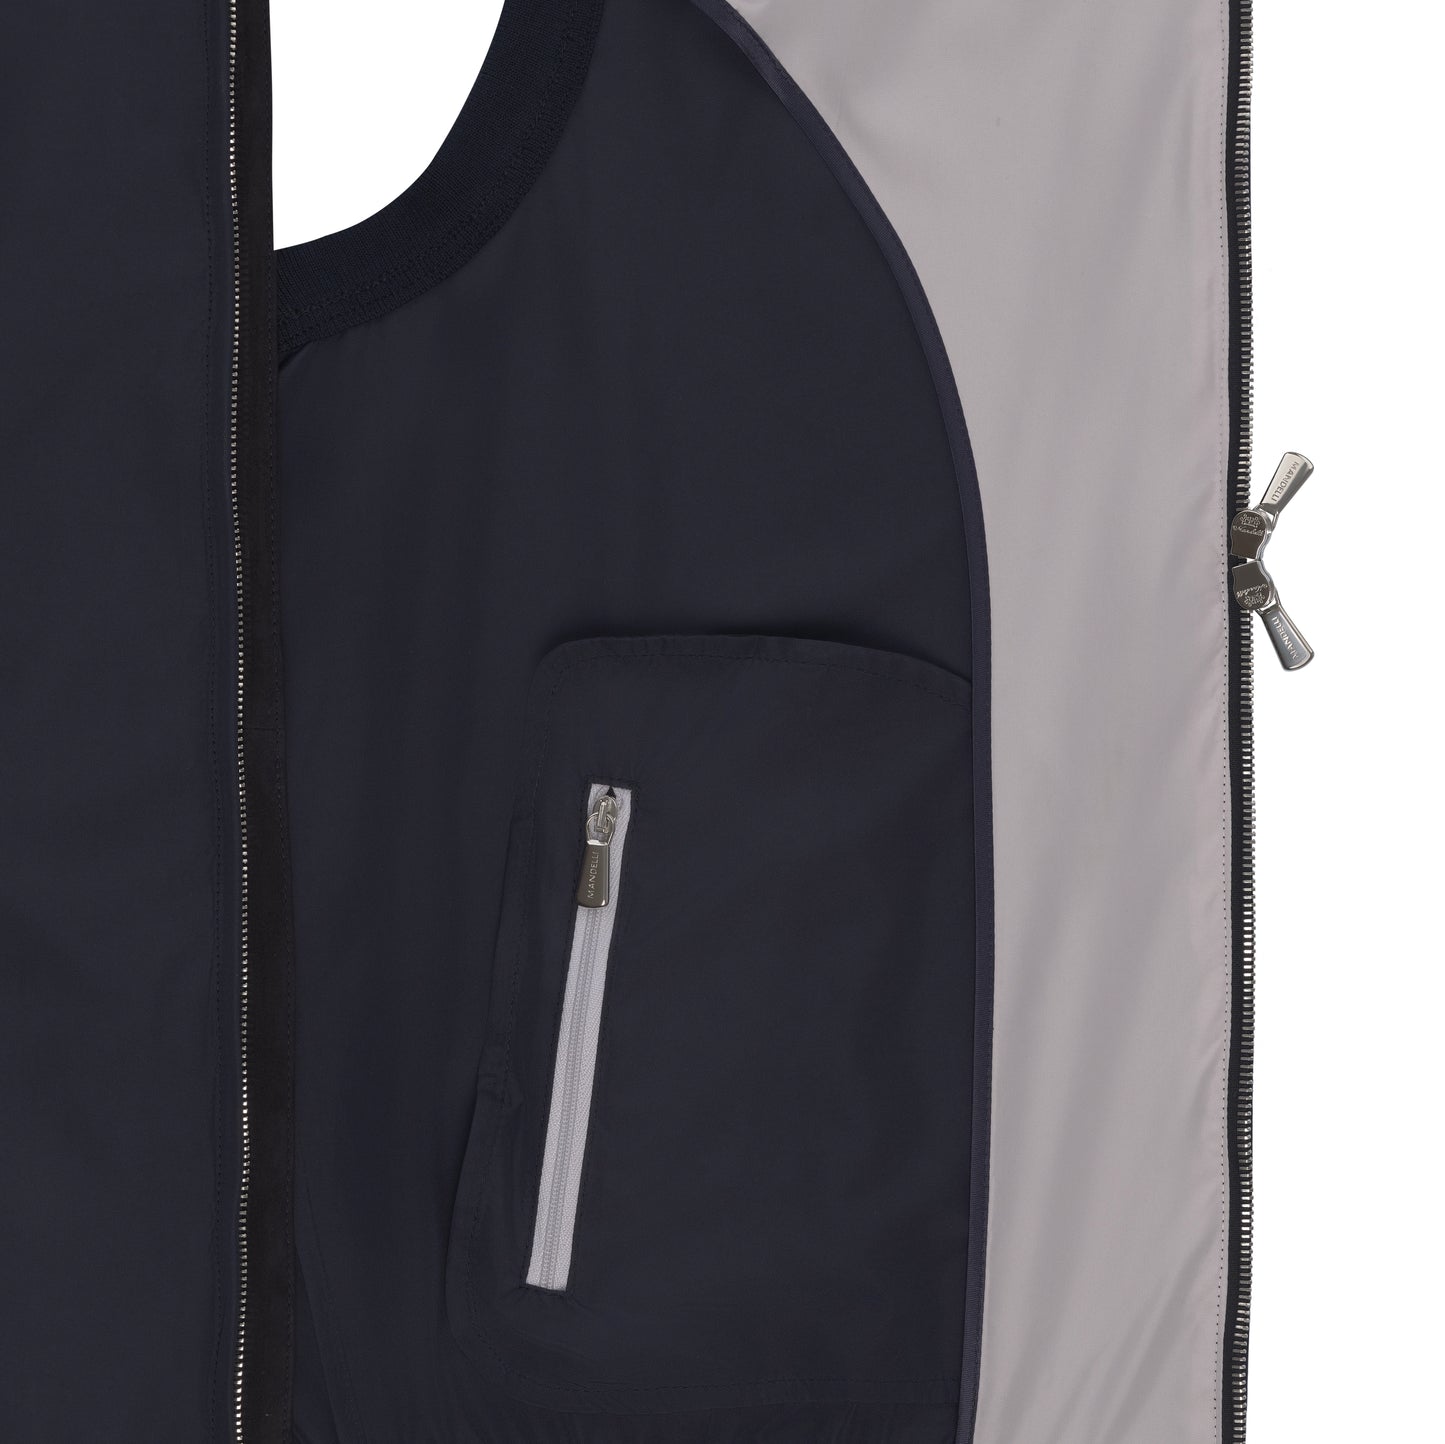 Bodywarmer in Blue with a Two-Way Zipper